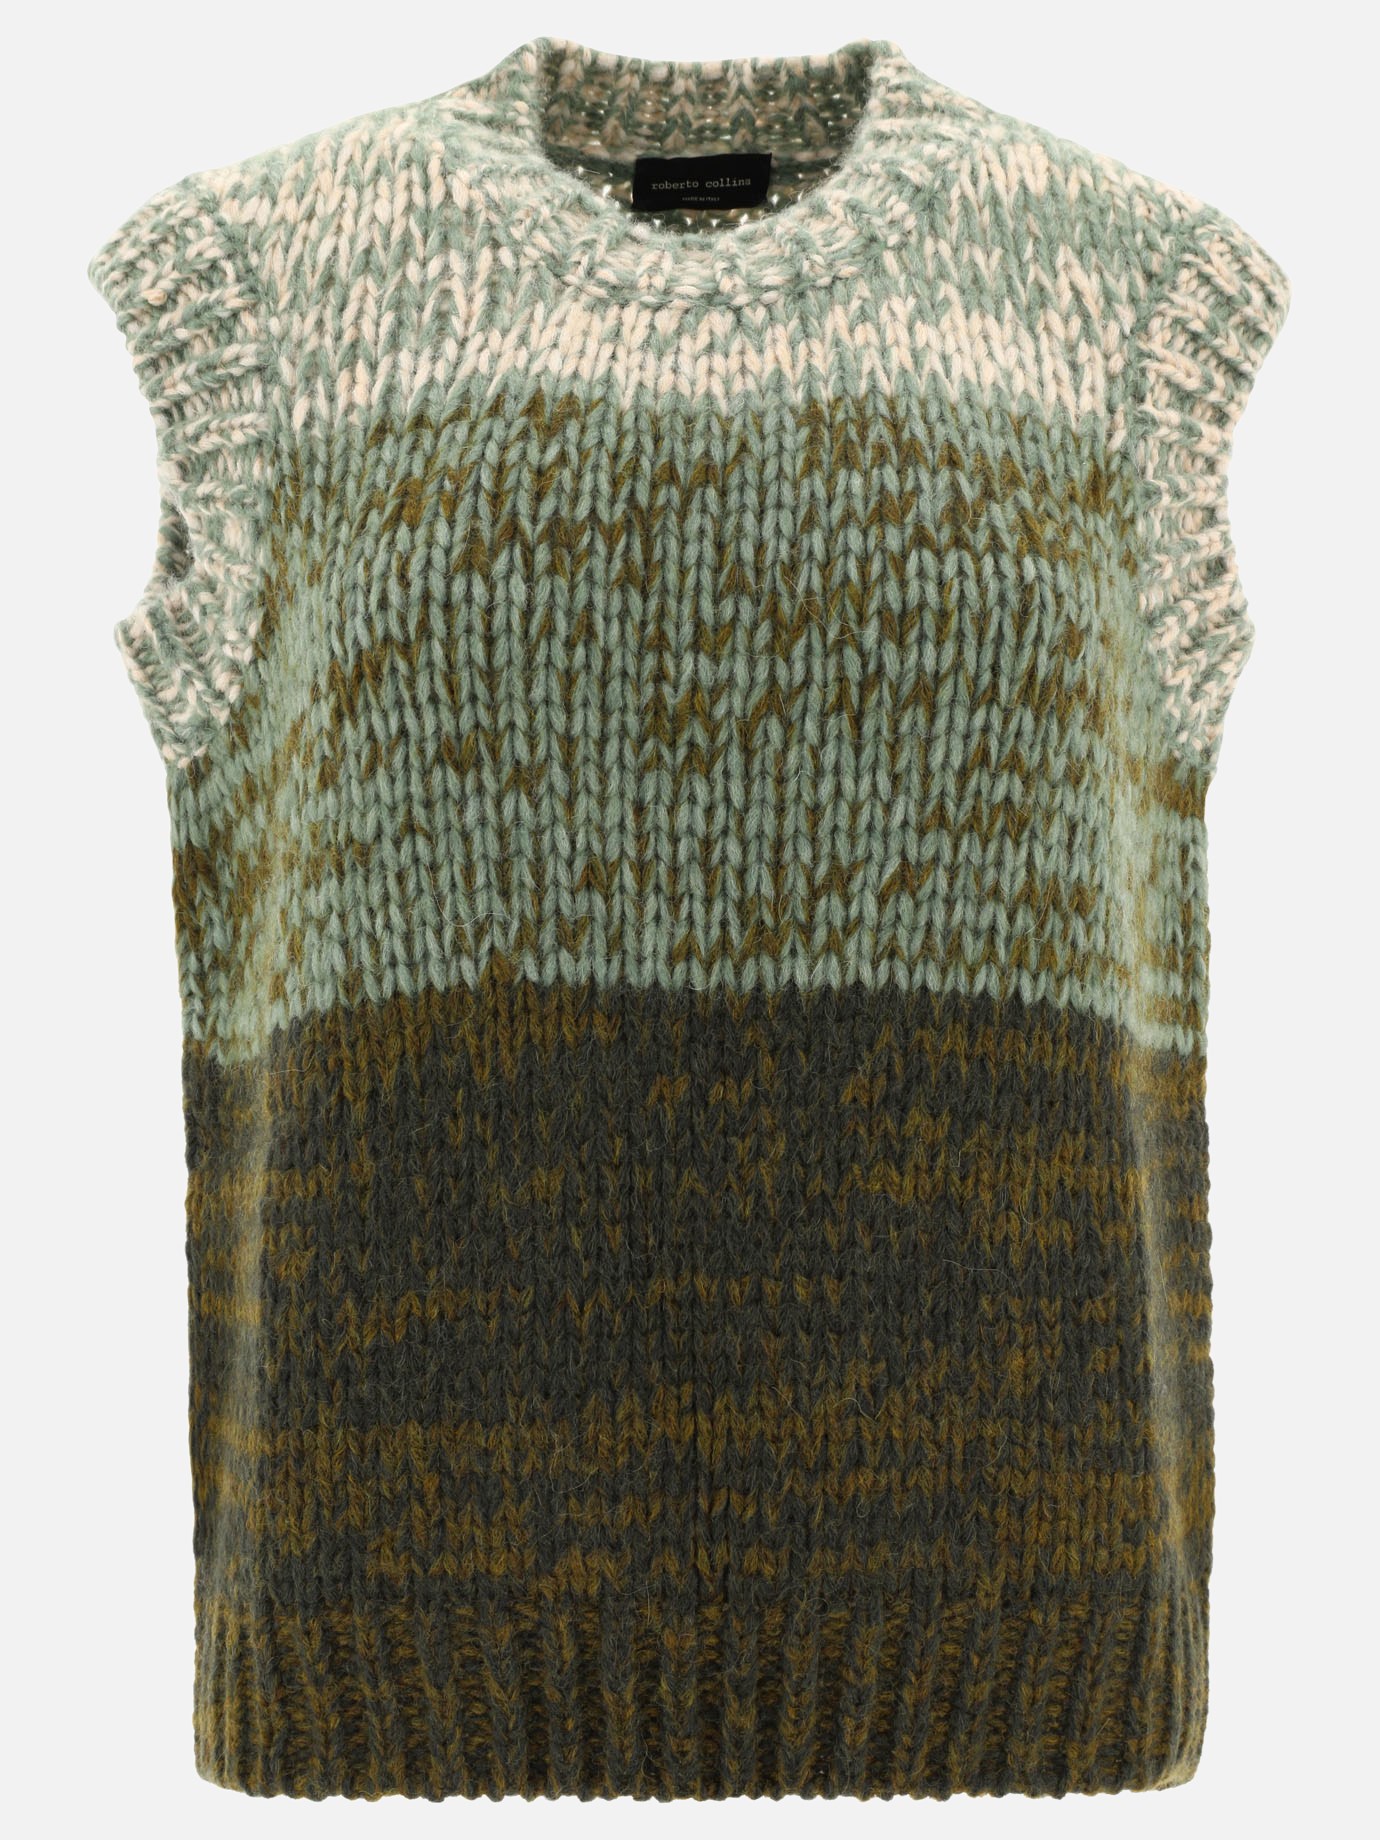 Degradé sleeveless sweater